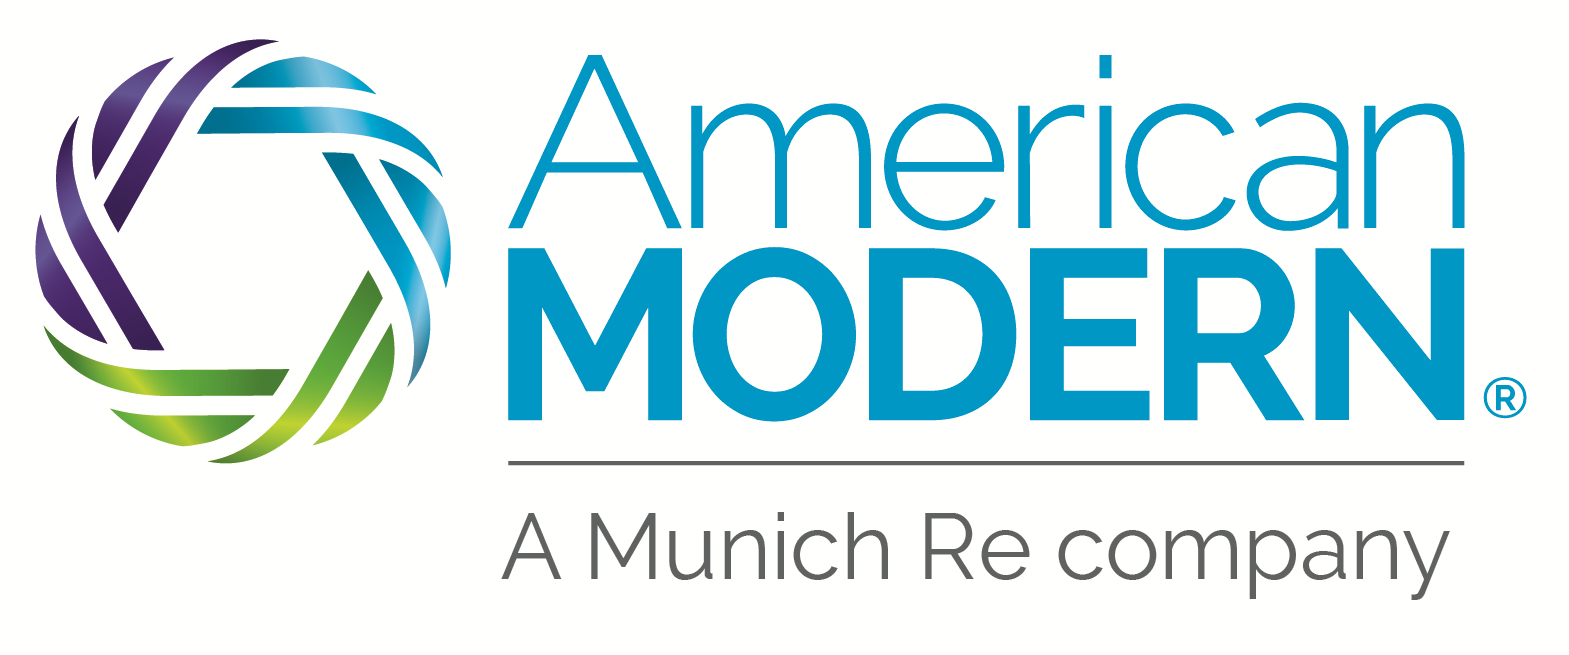 American Modern Insurance Group logo